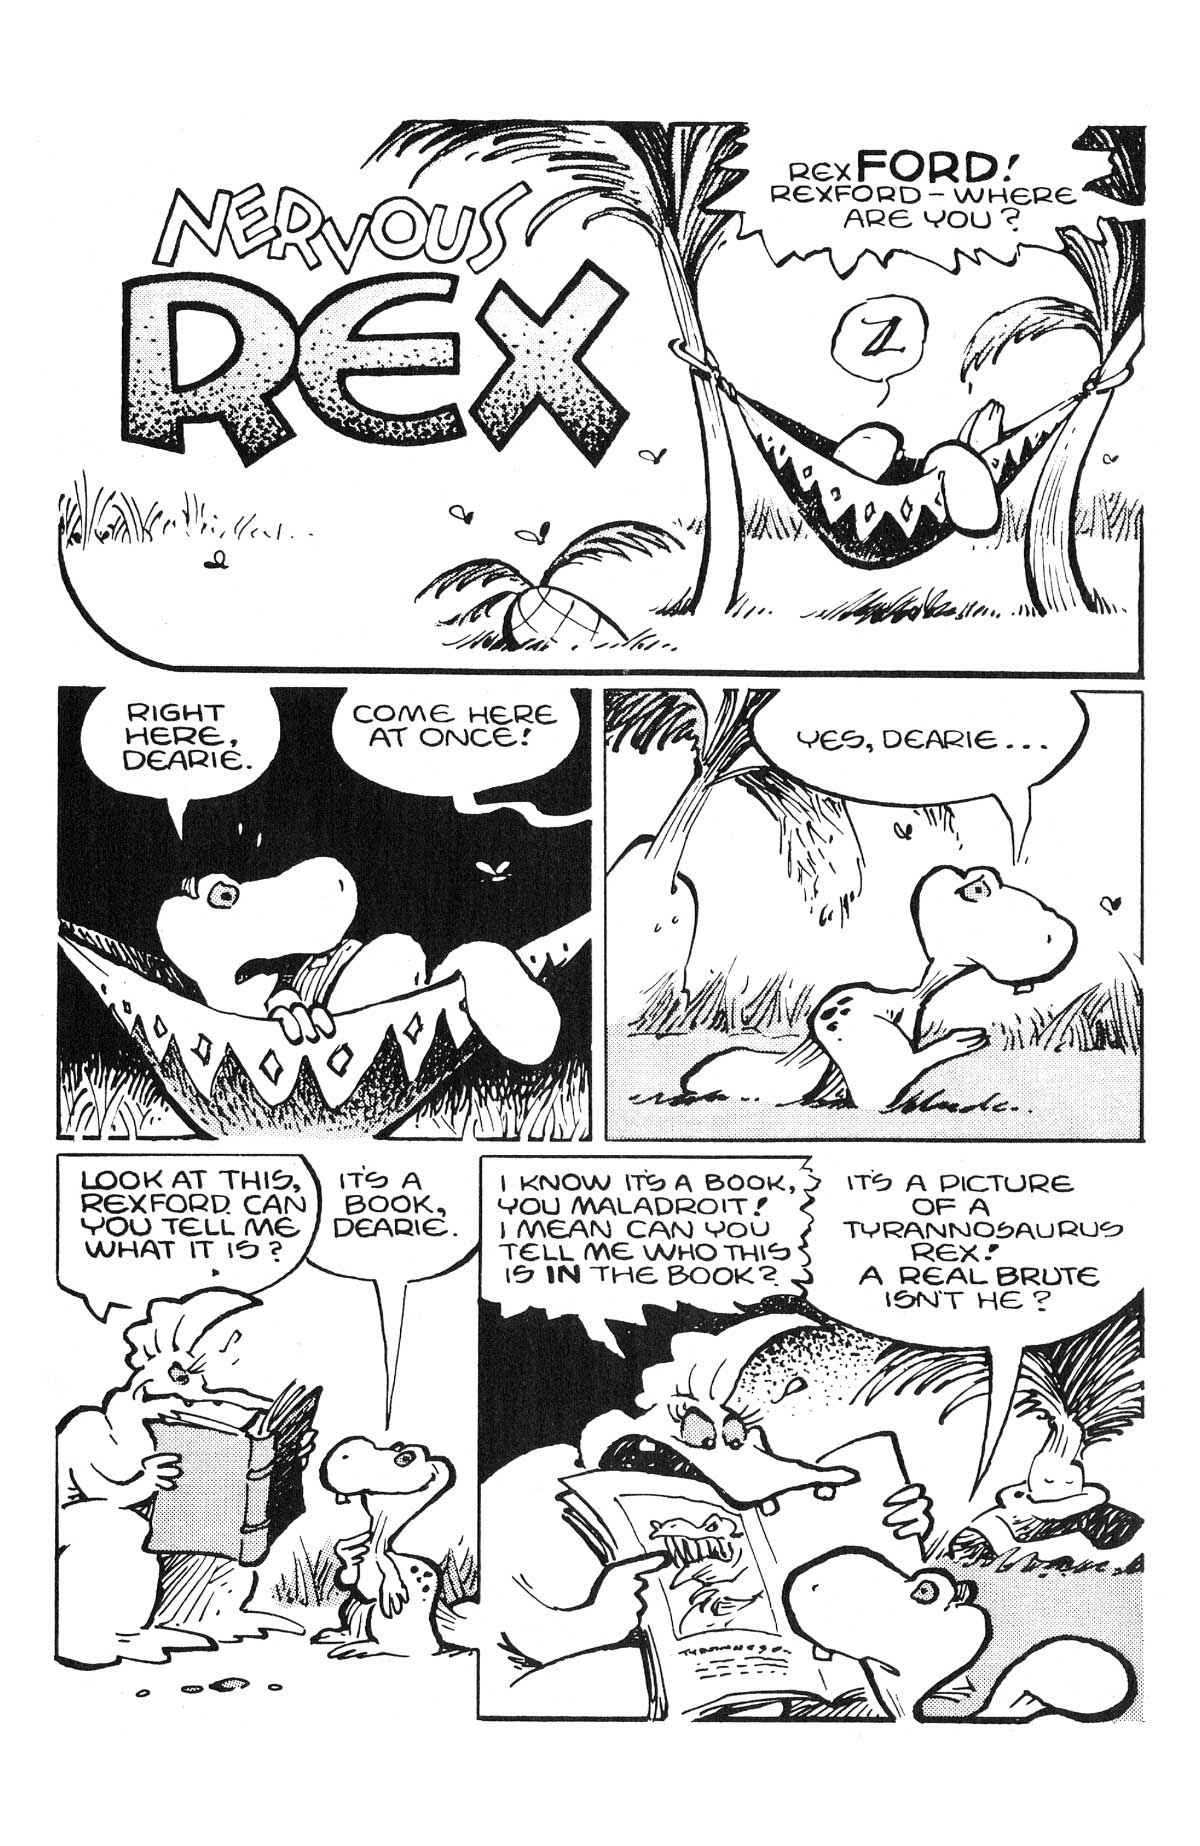 Read online Nervous Rex comic -  Issue #1 - 3